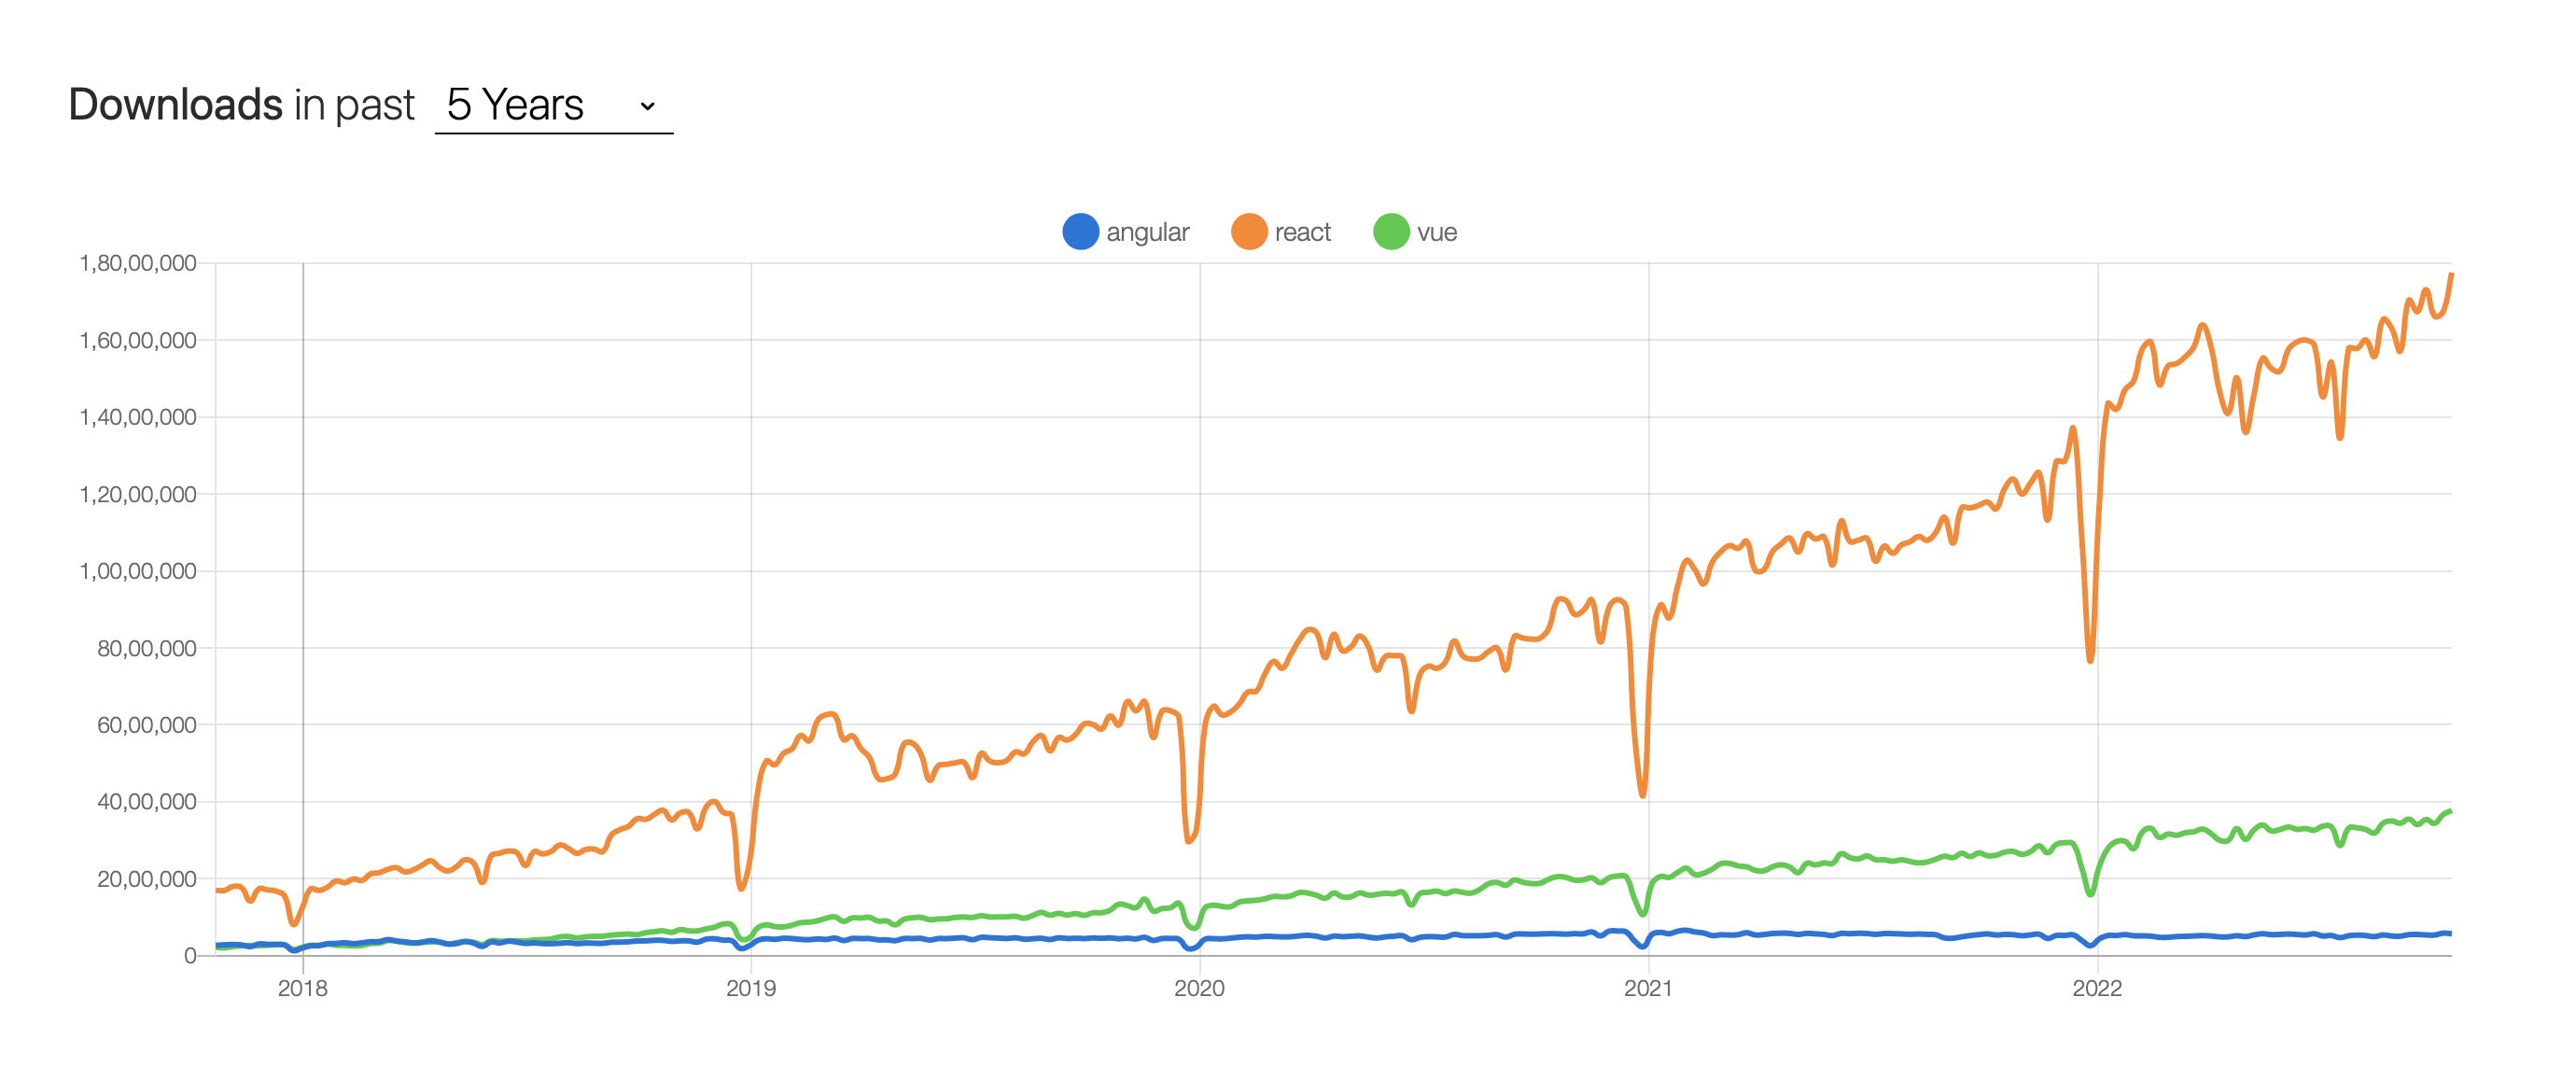 angular-vs-react-vs-vue npm trends